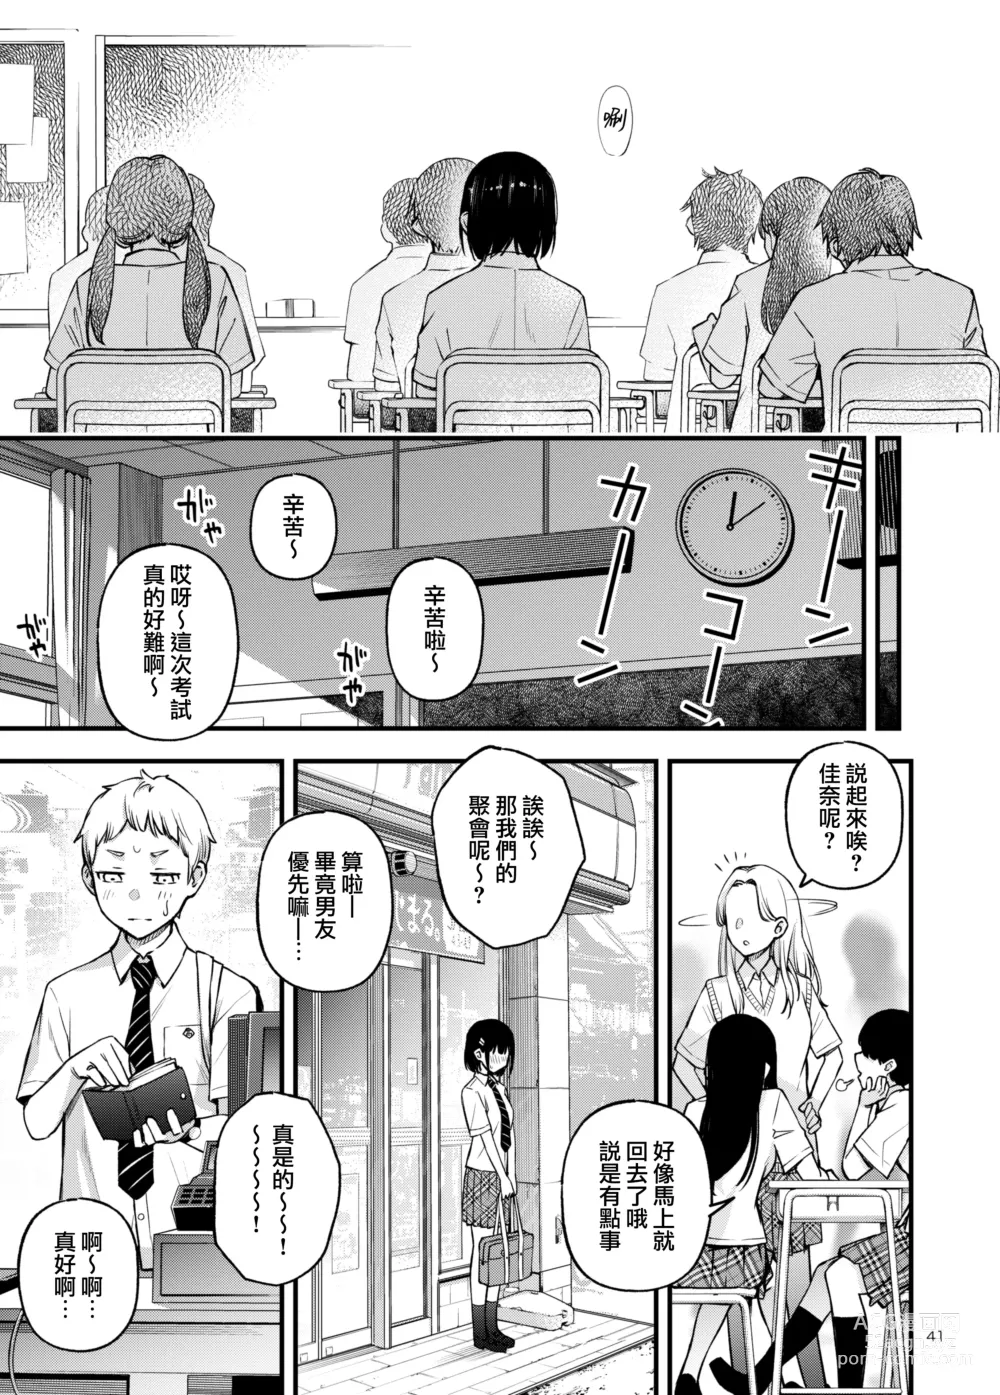 Page 42 of doujinshi 与处男初体验时觉醒的处女 2 #1-4